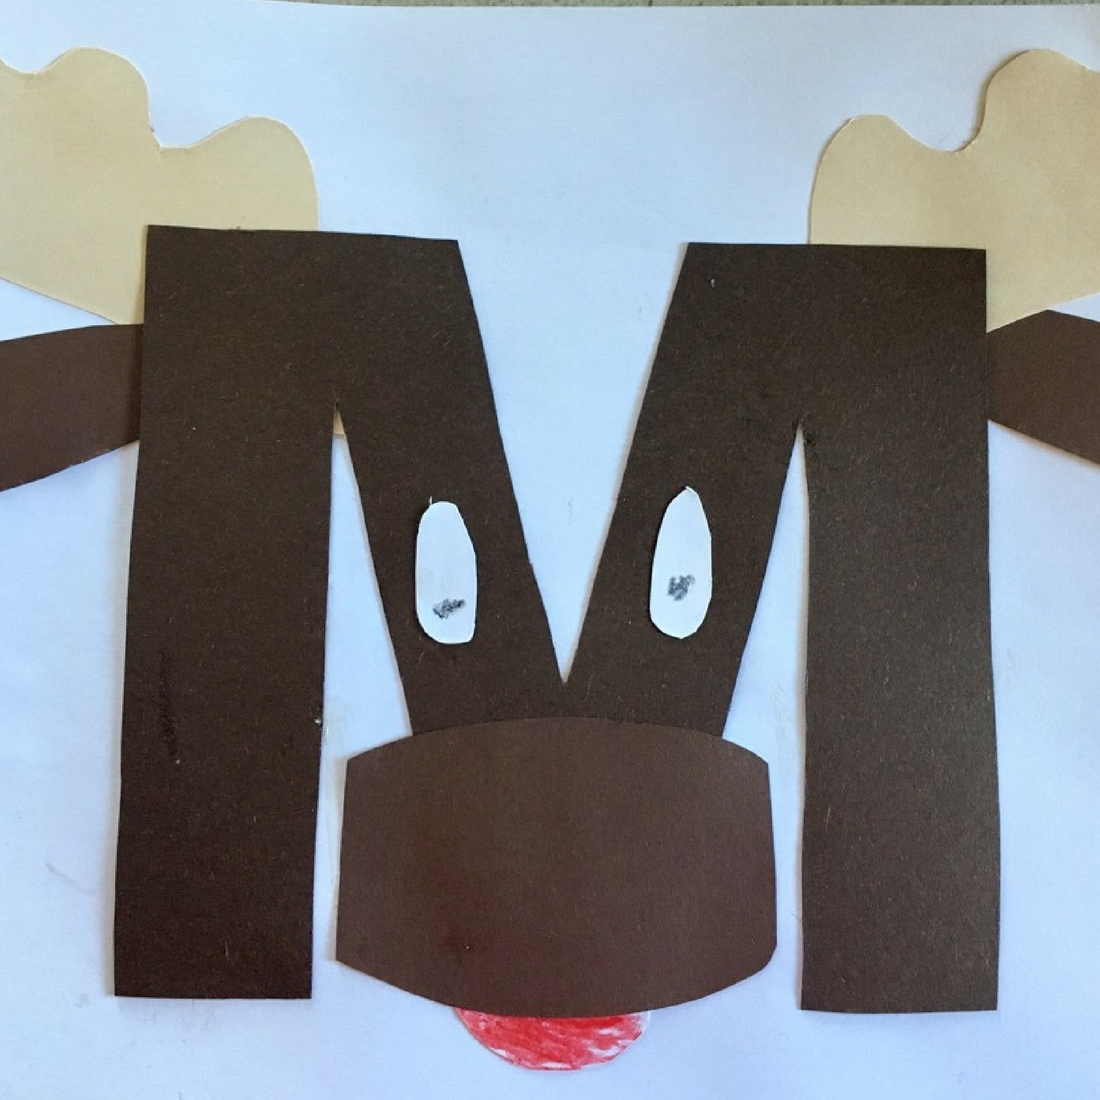 letter m preschool crafts